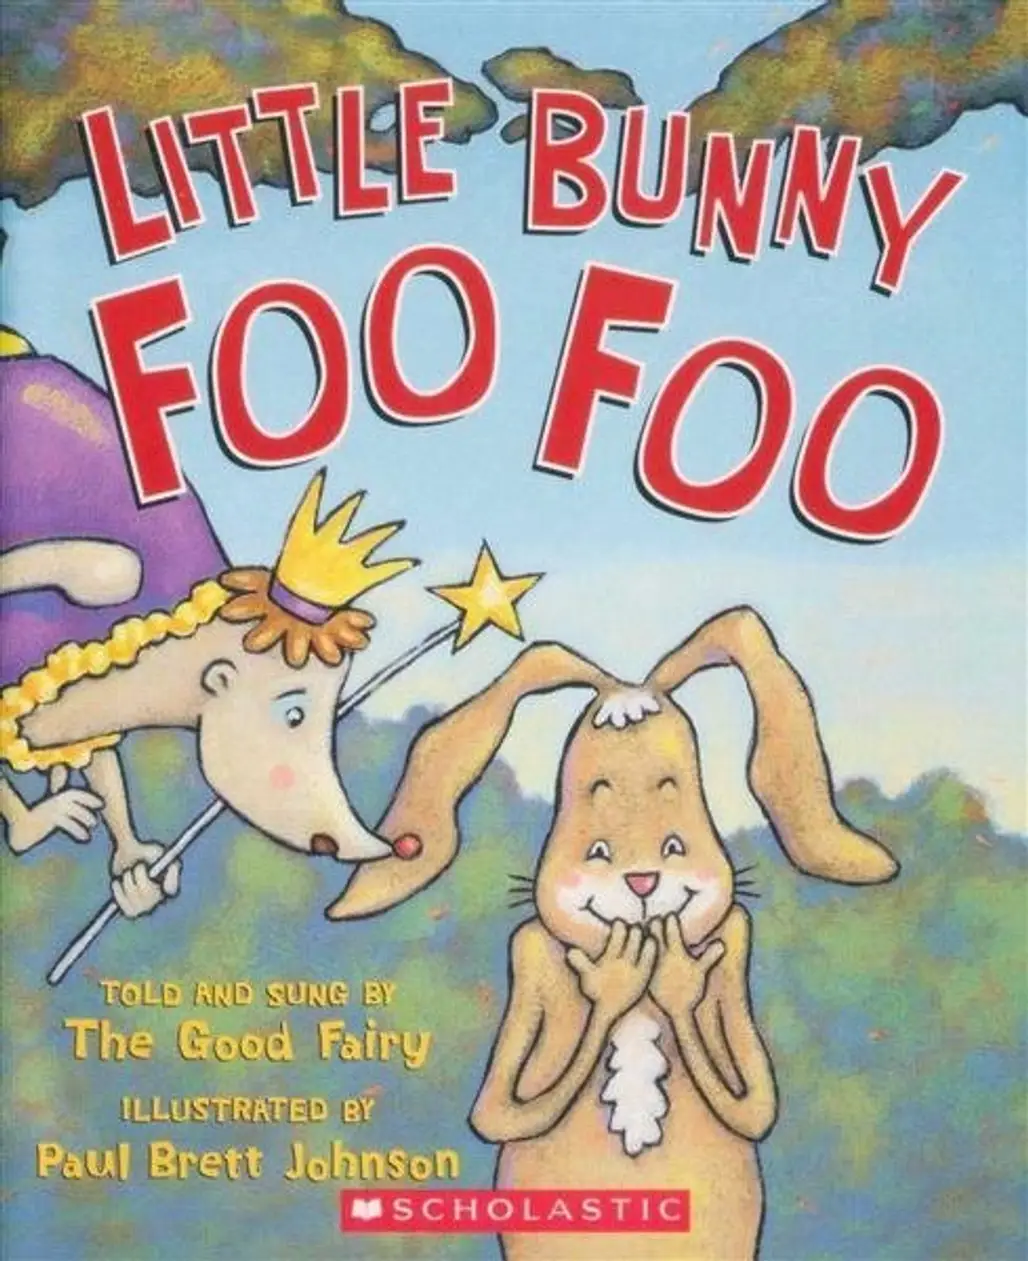 Little Bunny Foo Foo: Told and Sung by the Good Fairy by Paul Brett Johnson